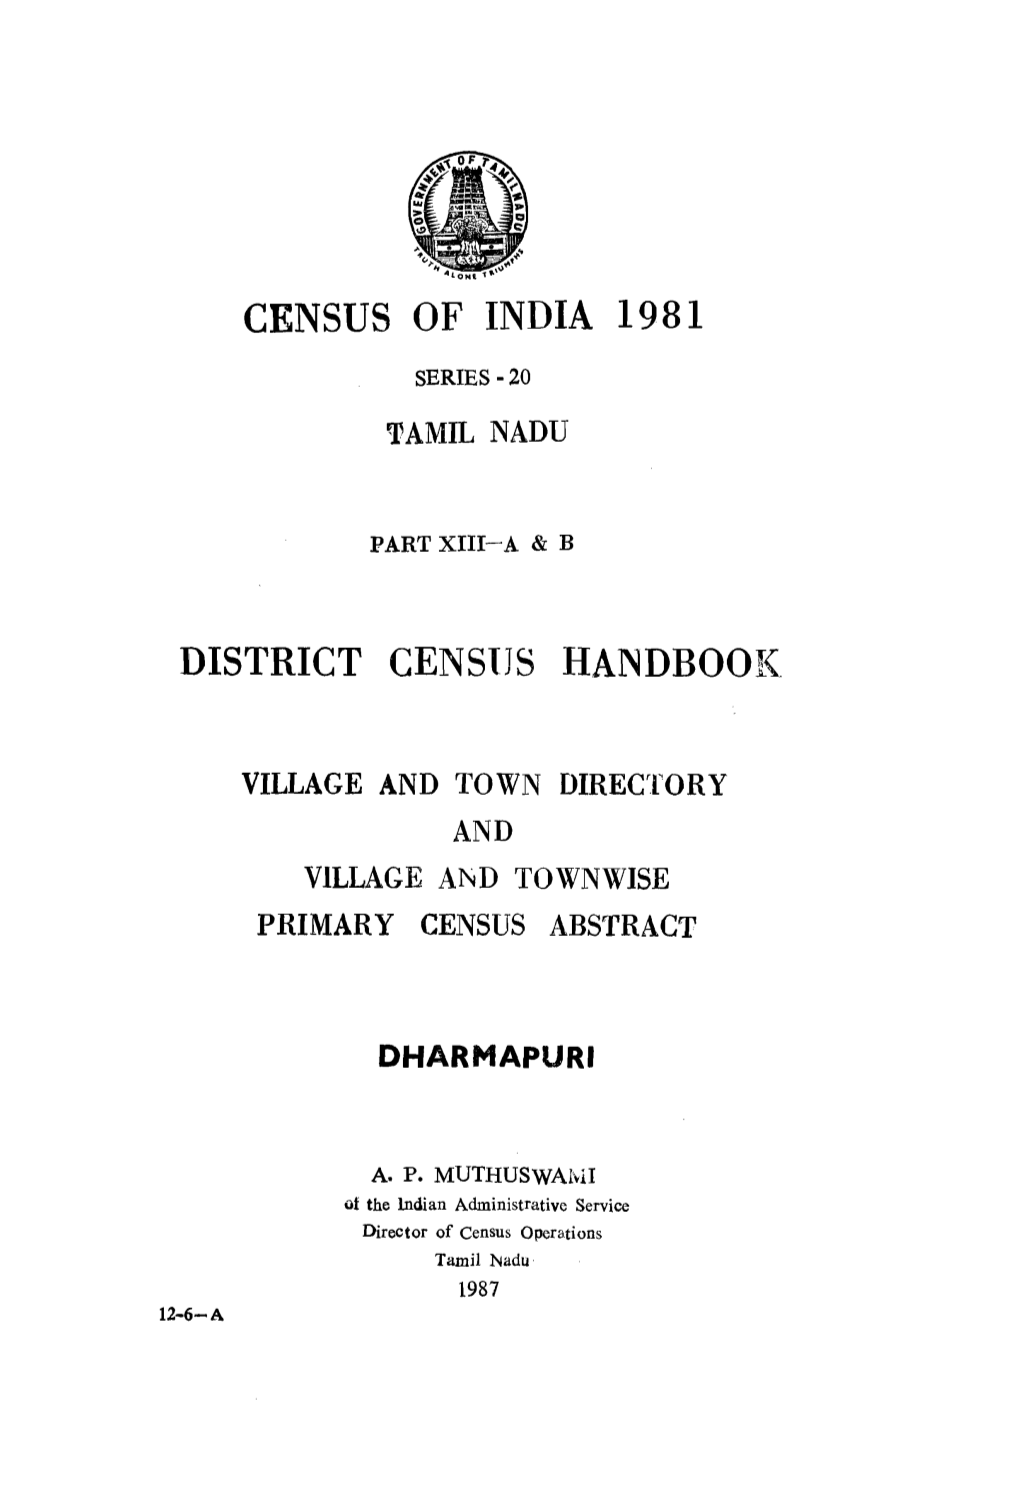 District Census Handbook, Dharmapuri, Part XIII a & B, Series-20